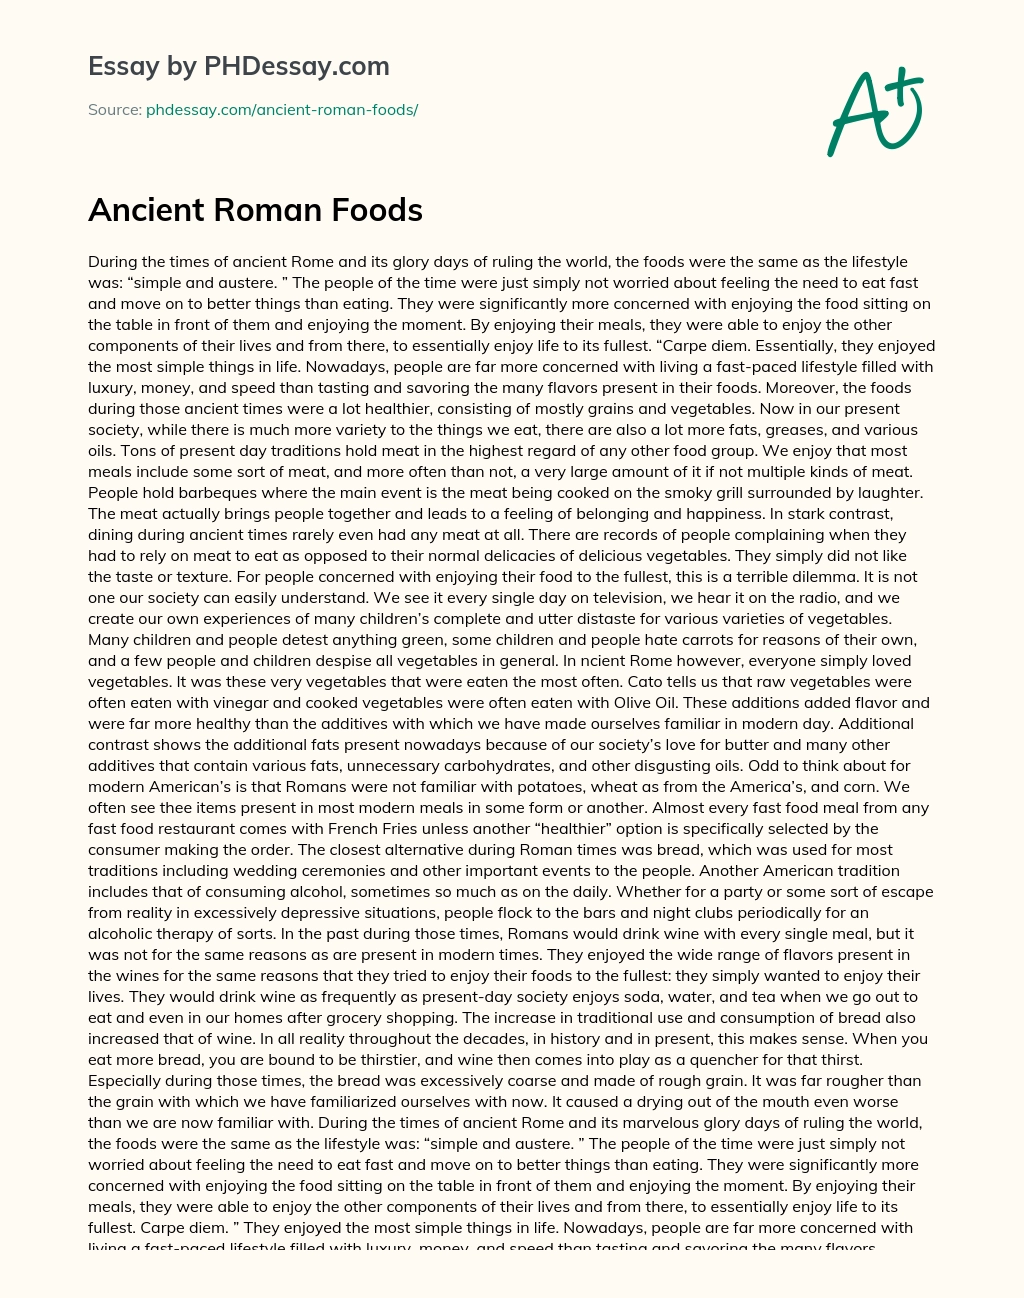 Ancient Roman Foods essay